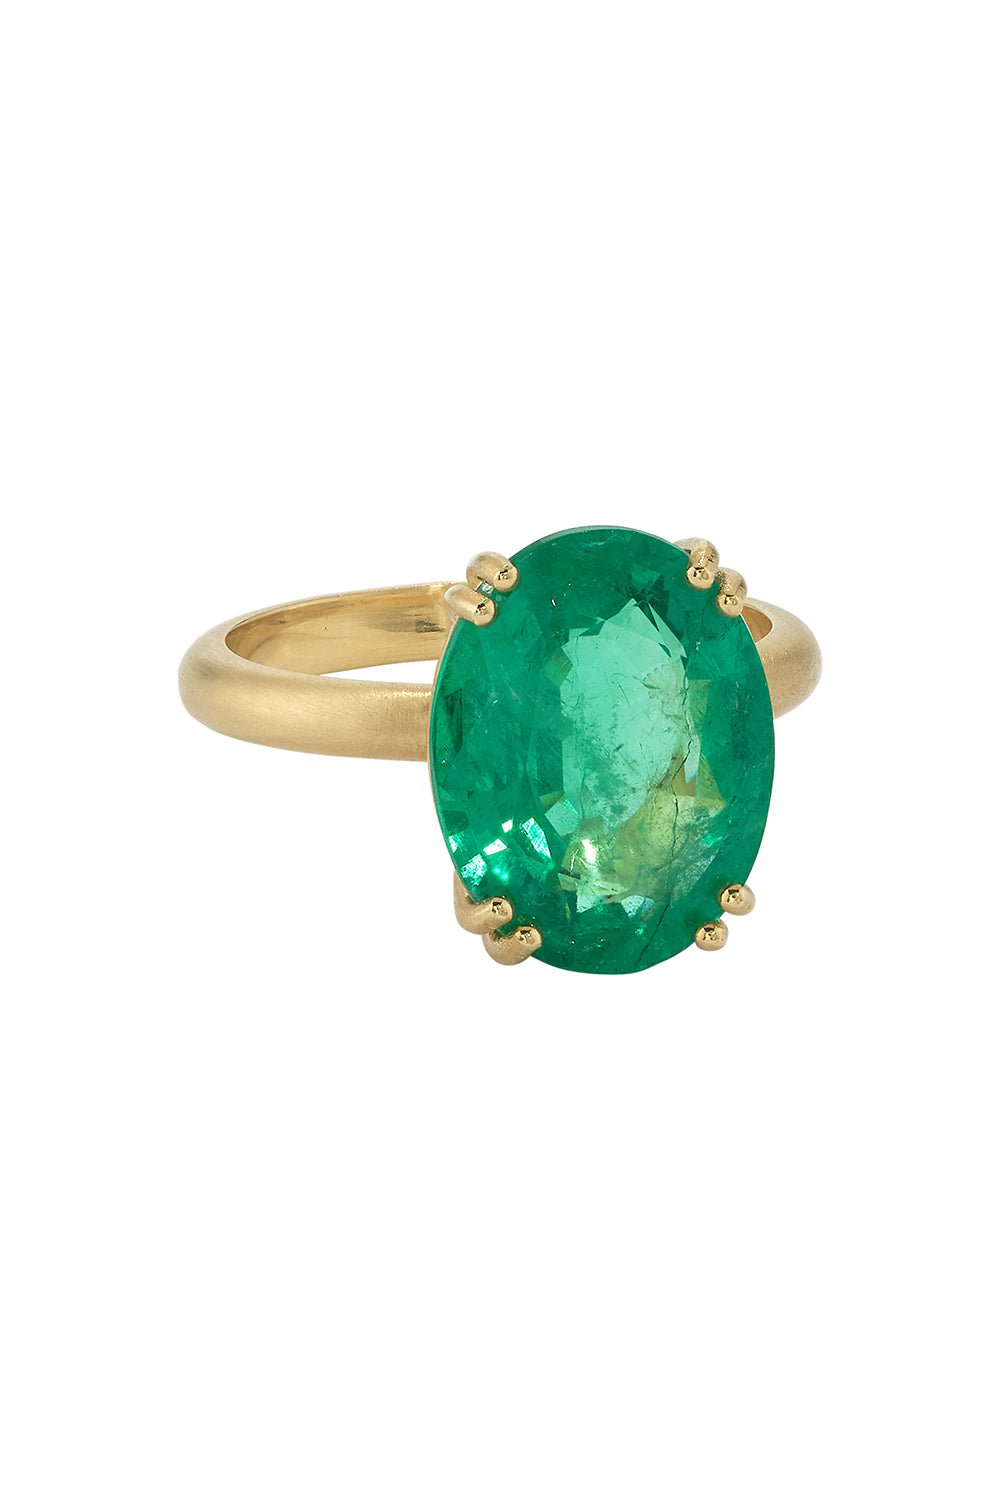 IRENE NEUWIRTH JEWELRY-Gemmy Gem Double Prong Emerald Ring-YELLOW GOLD